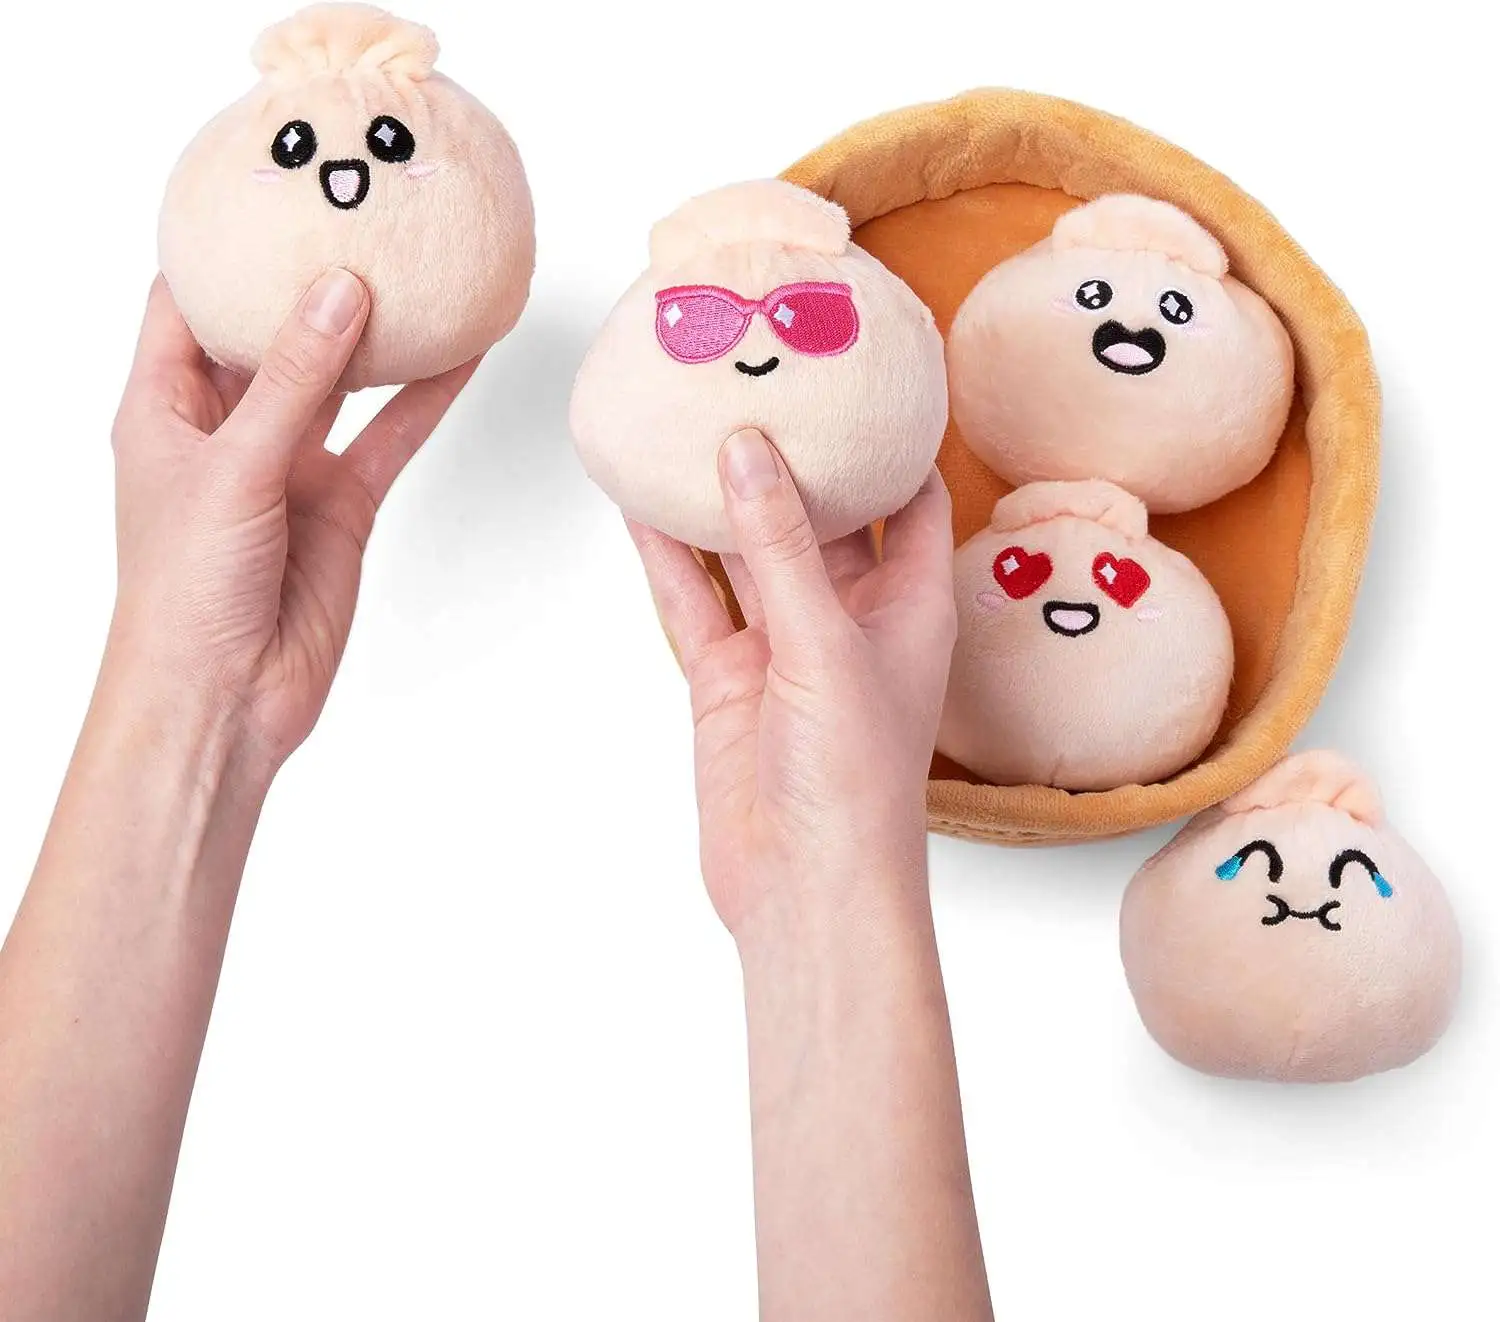 Emotional Support Dumplings Plush Set What Do You Meme - ToyWiz